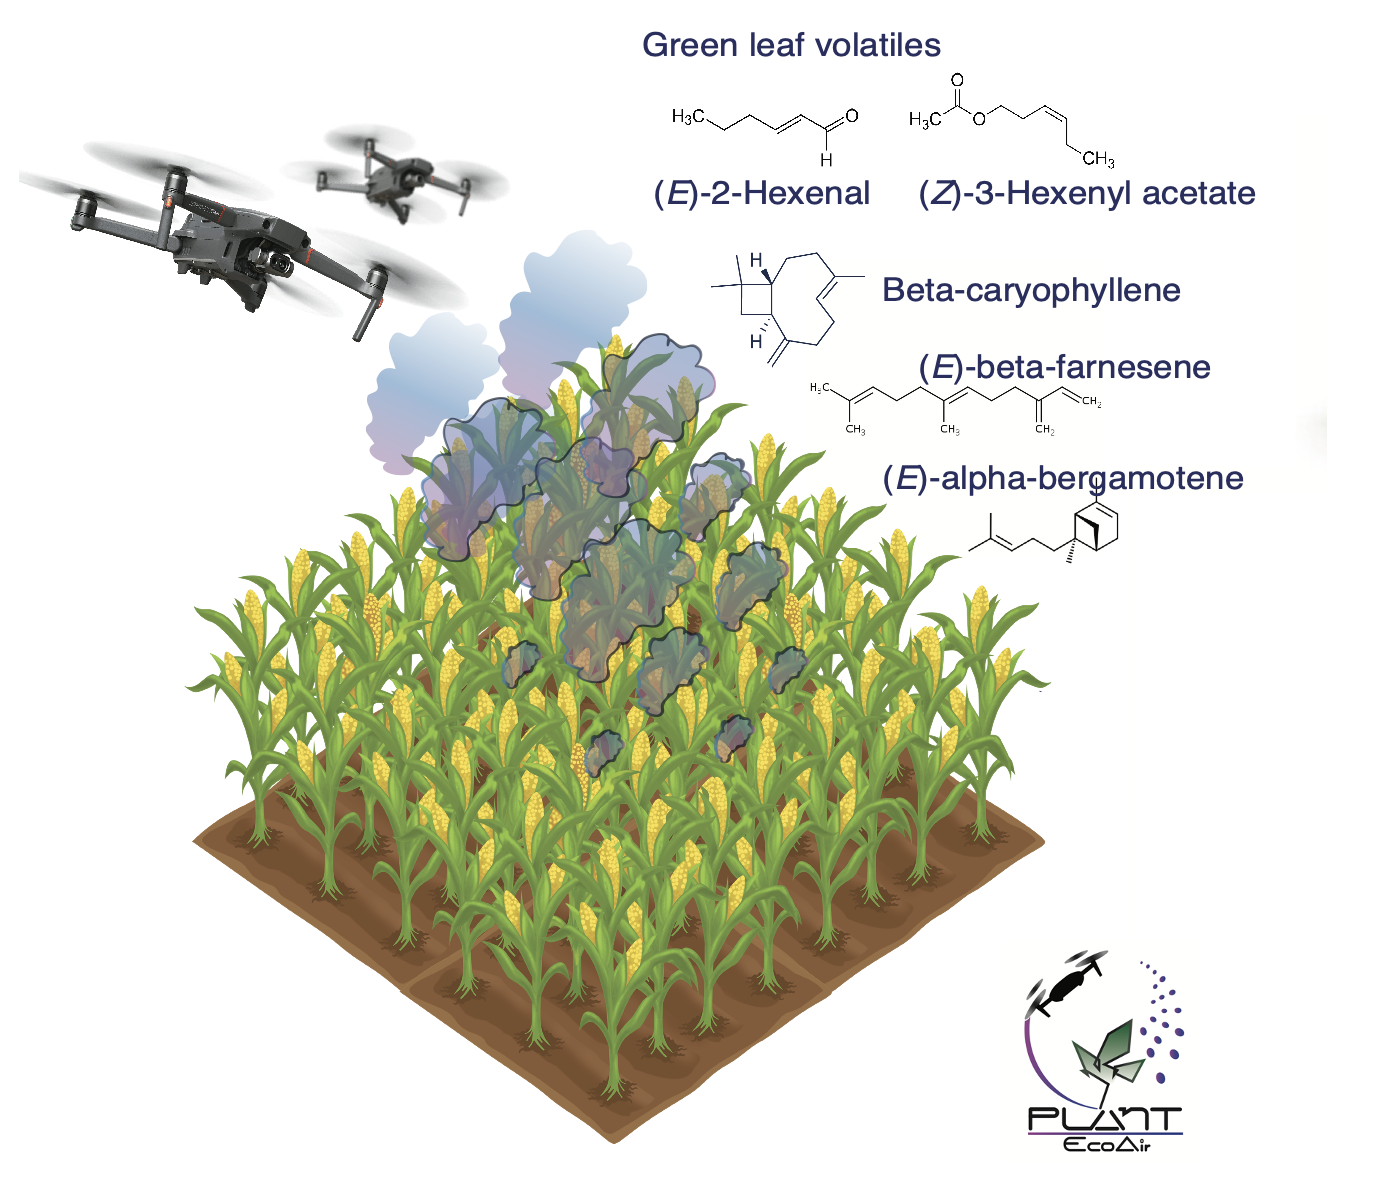 drones detecting volatiles above crops